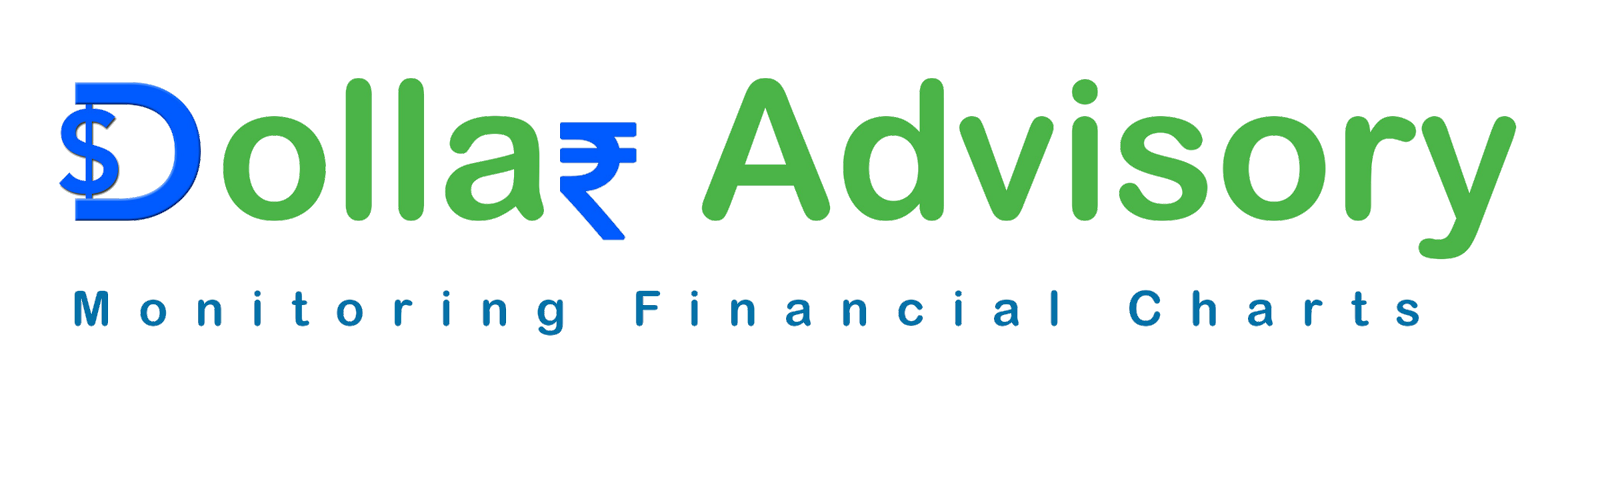 Dollar Advisory Financial Services